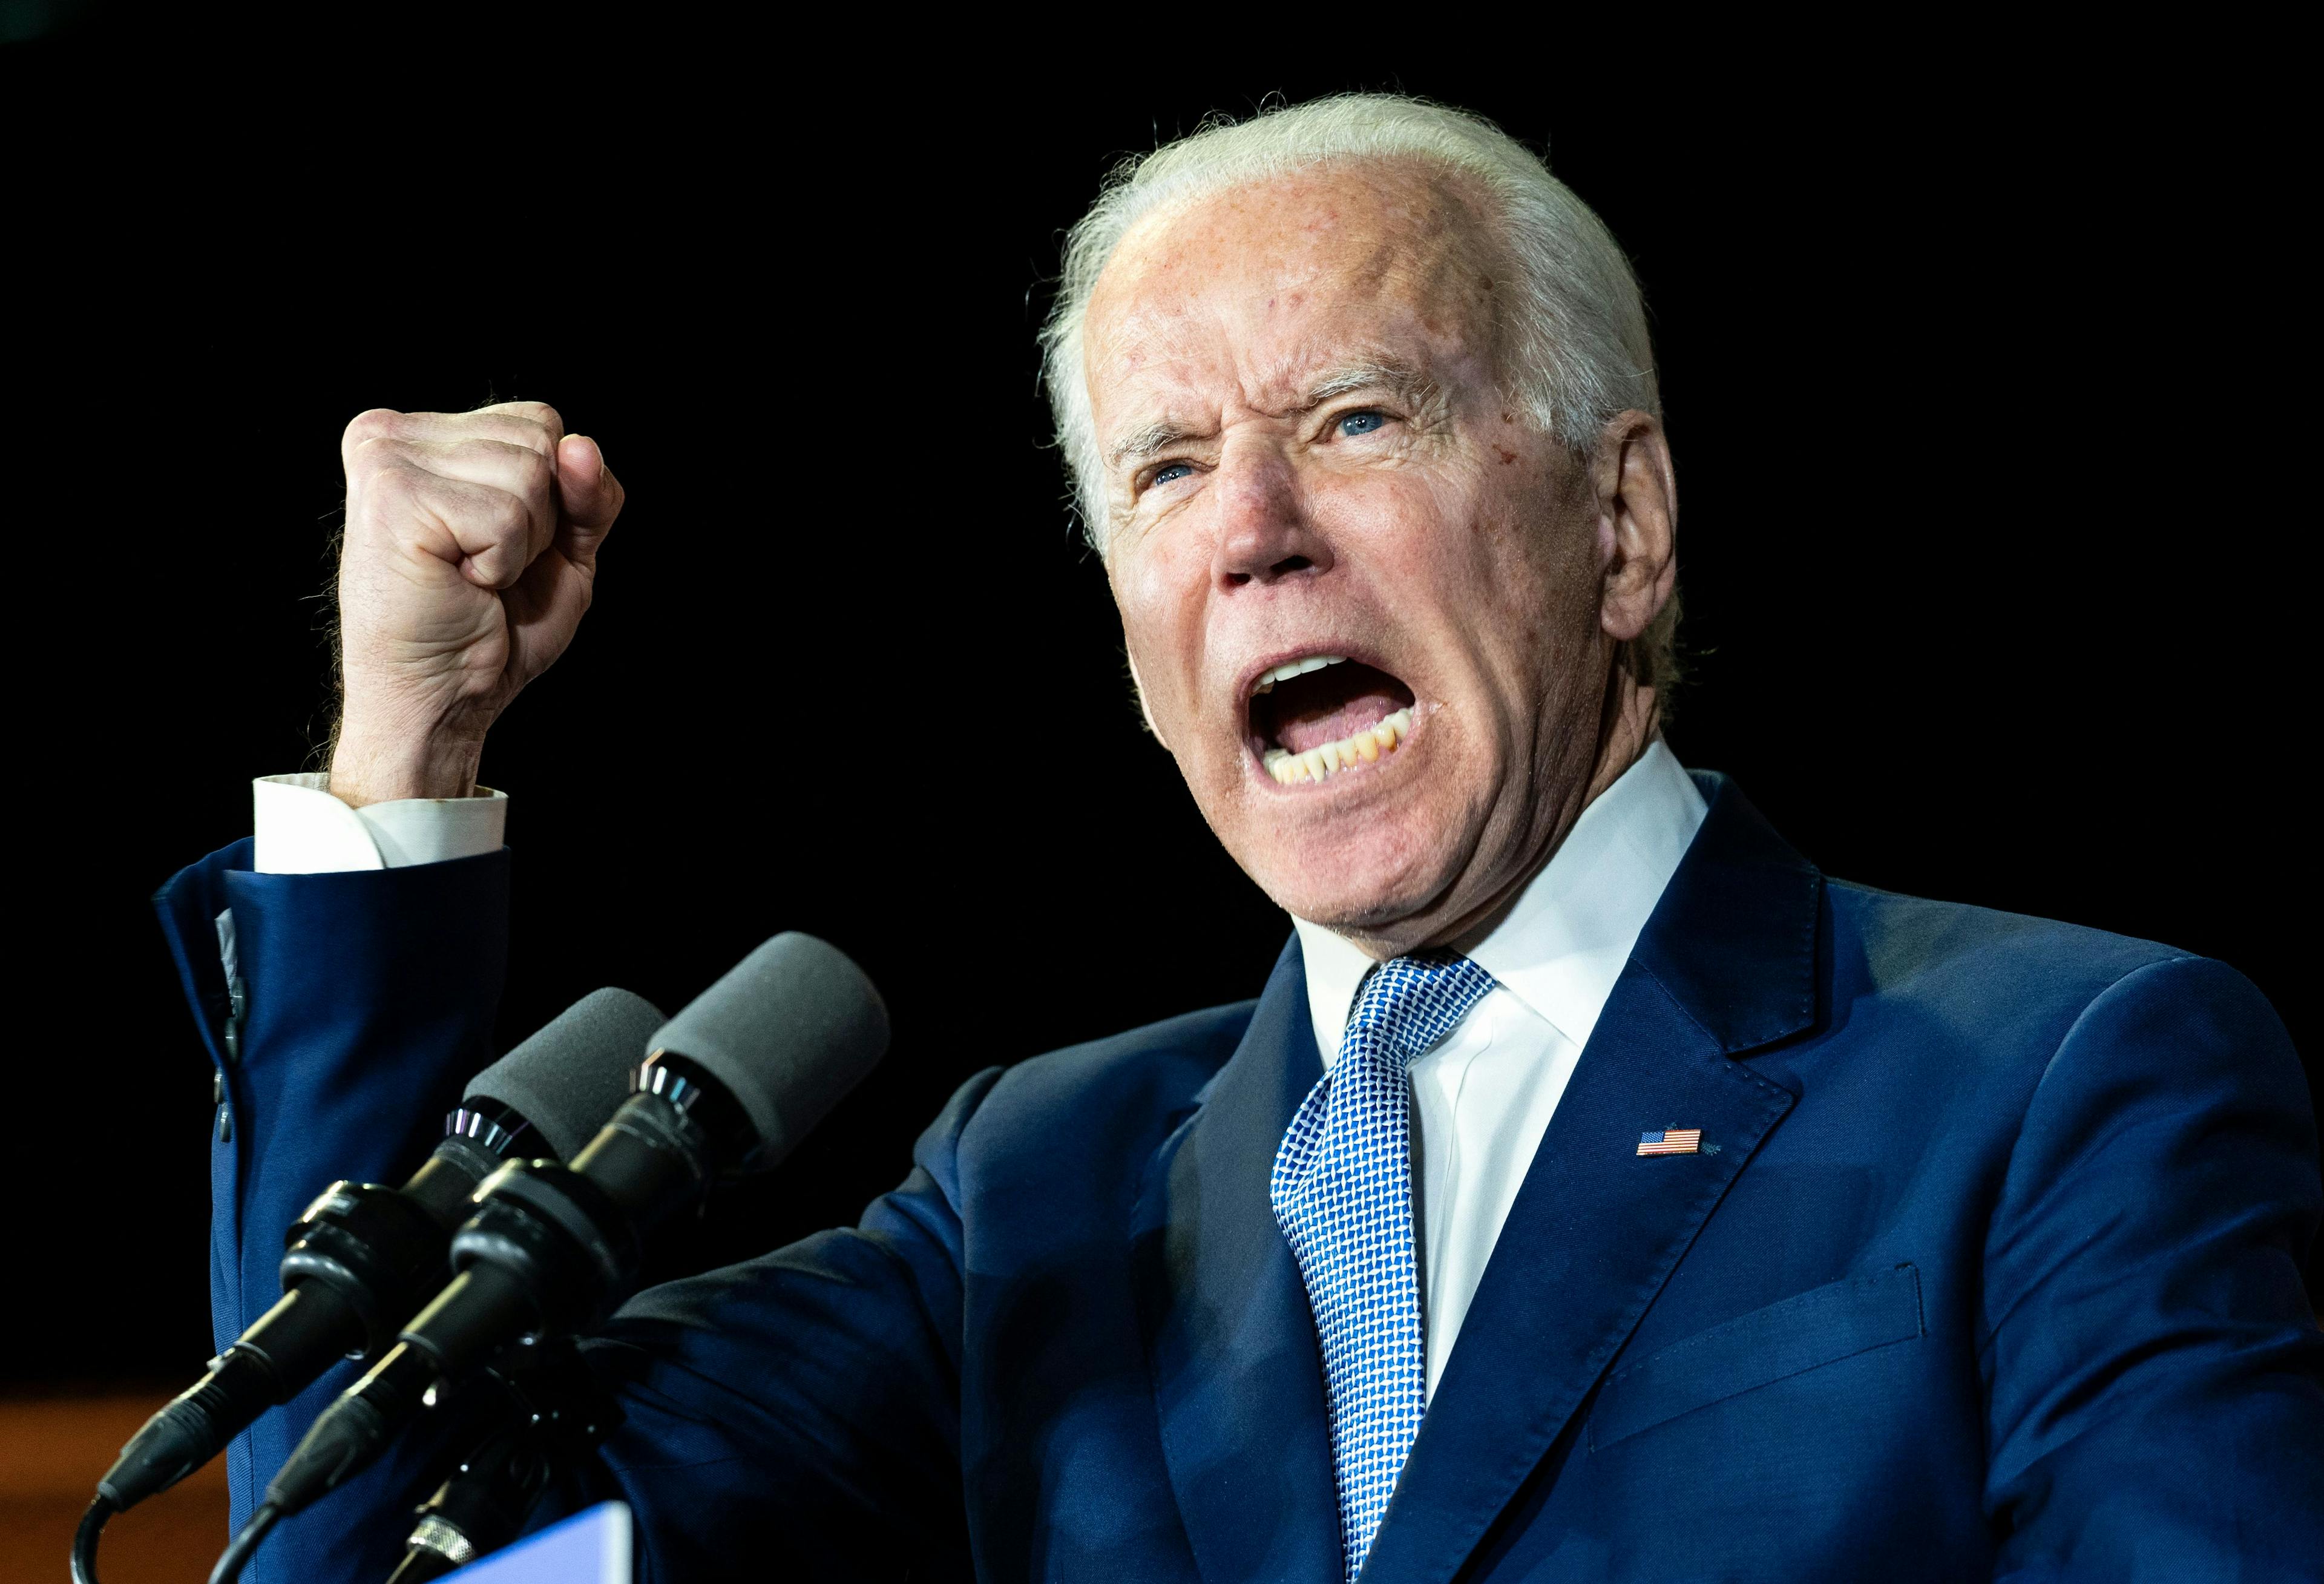 Who is Joe Biden, really?